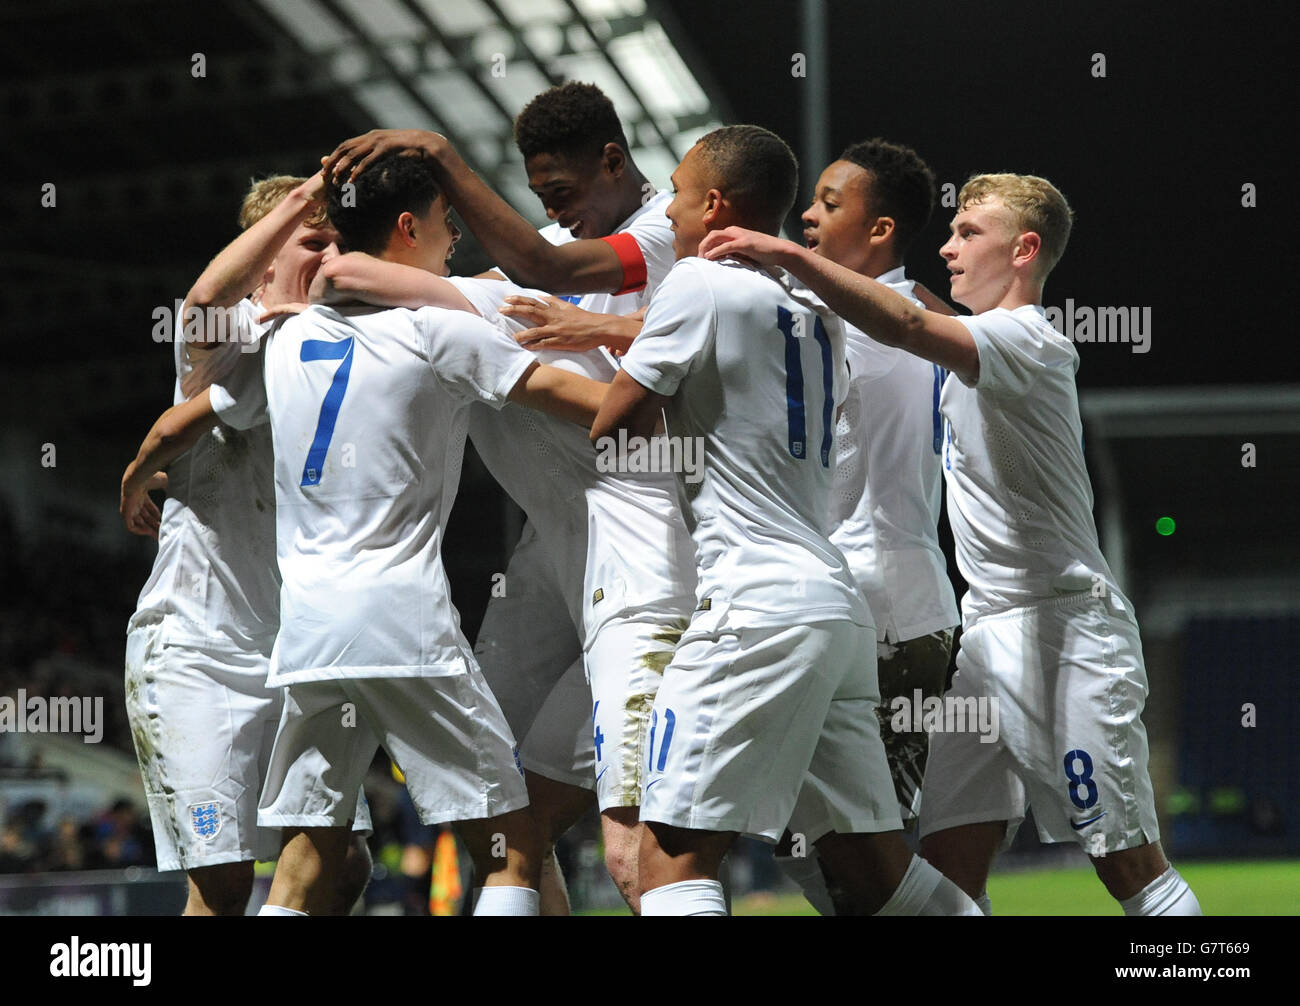 Soccer - UEFA Under-17 Championship - Elite Round - Group 6 - England v Slovenia - Proact Stadium. England's Nathan Holland (7) celebrates scoring his side's second goal of the game alongside teammates Stock Photo